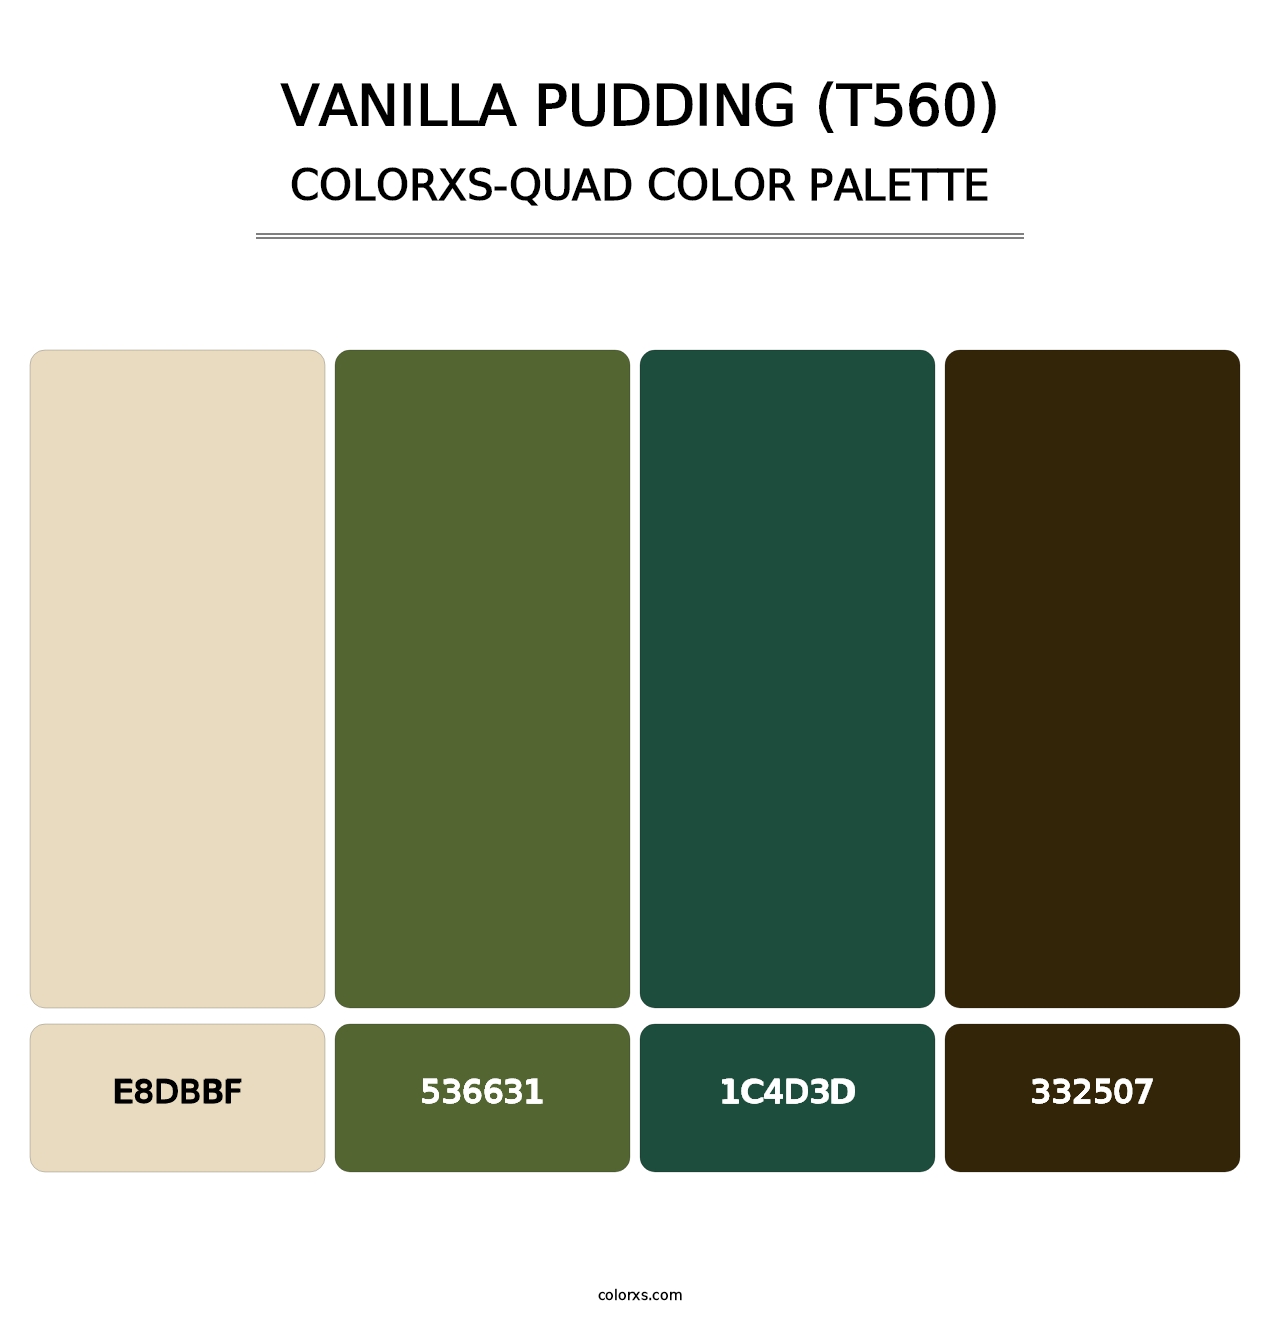 Vanilla Pudding (T560) - Colorxs Quad Palette